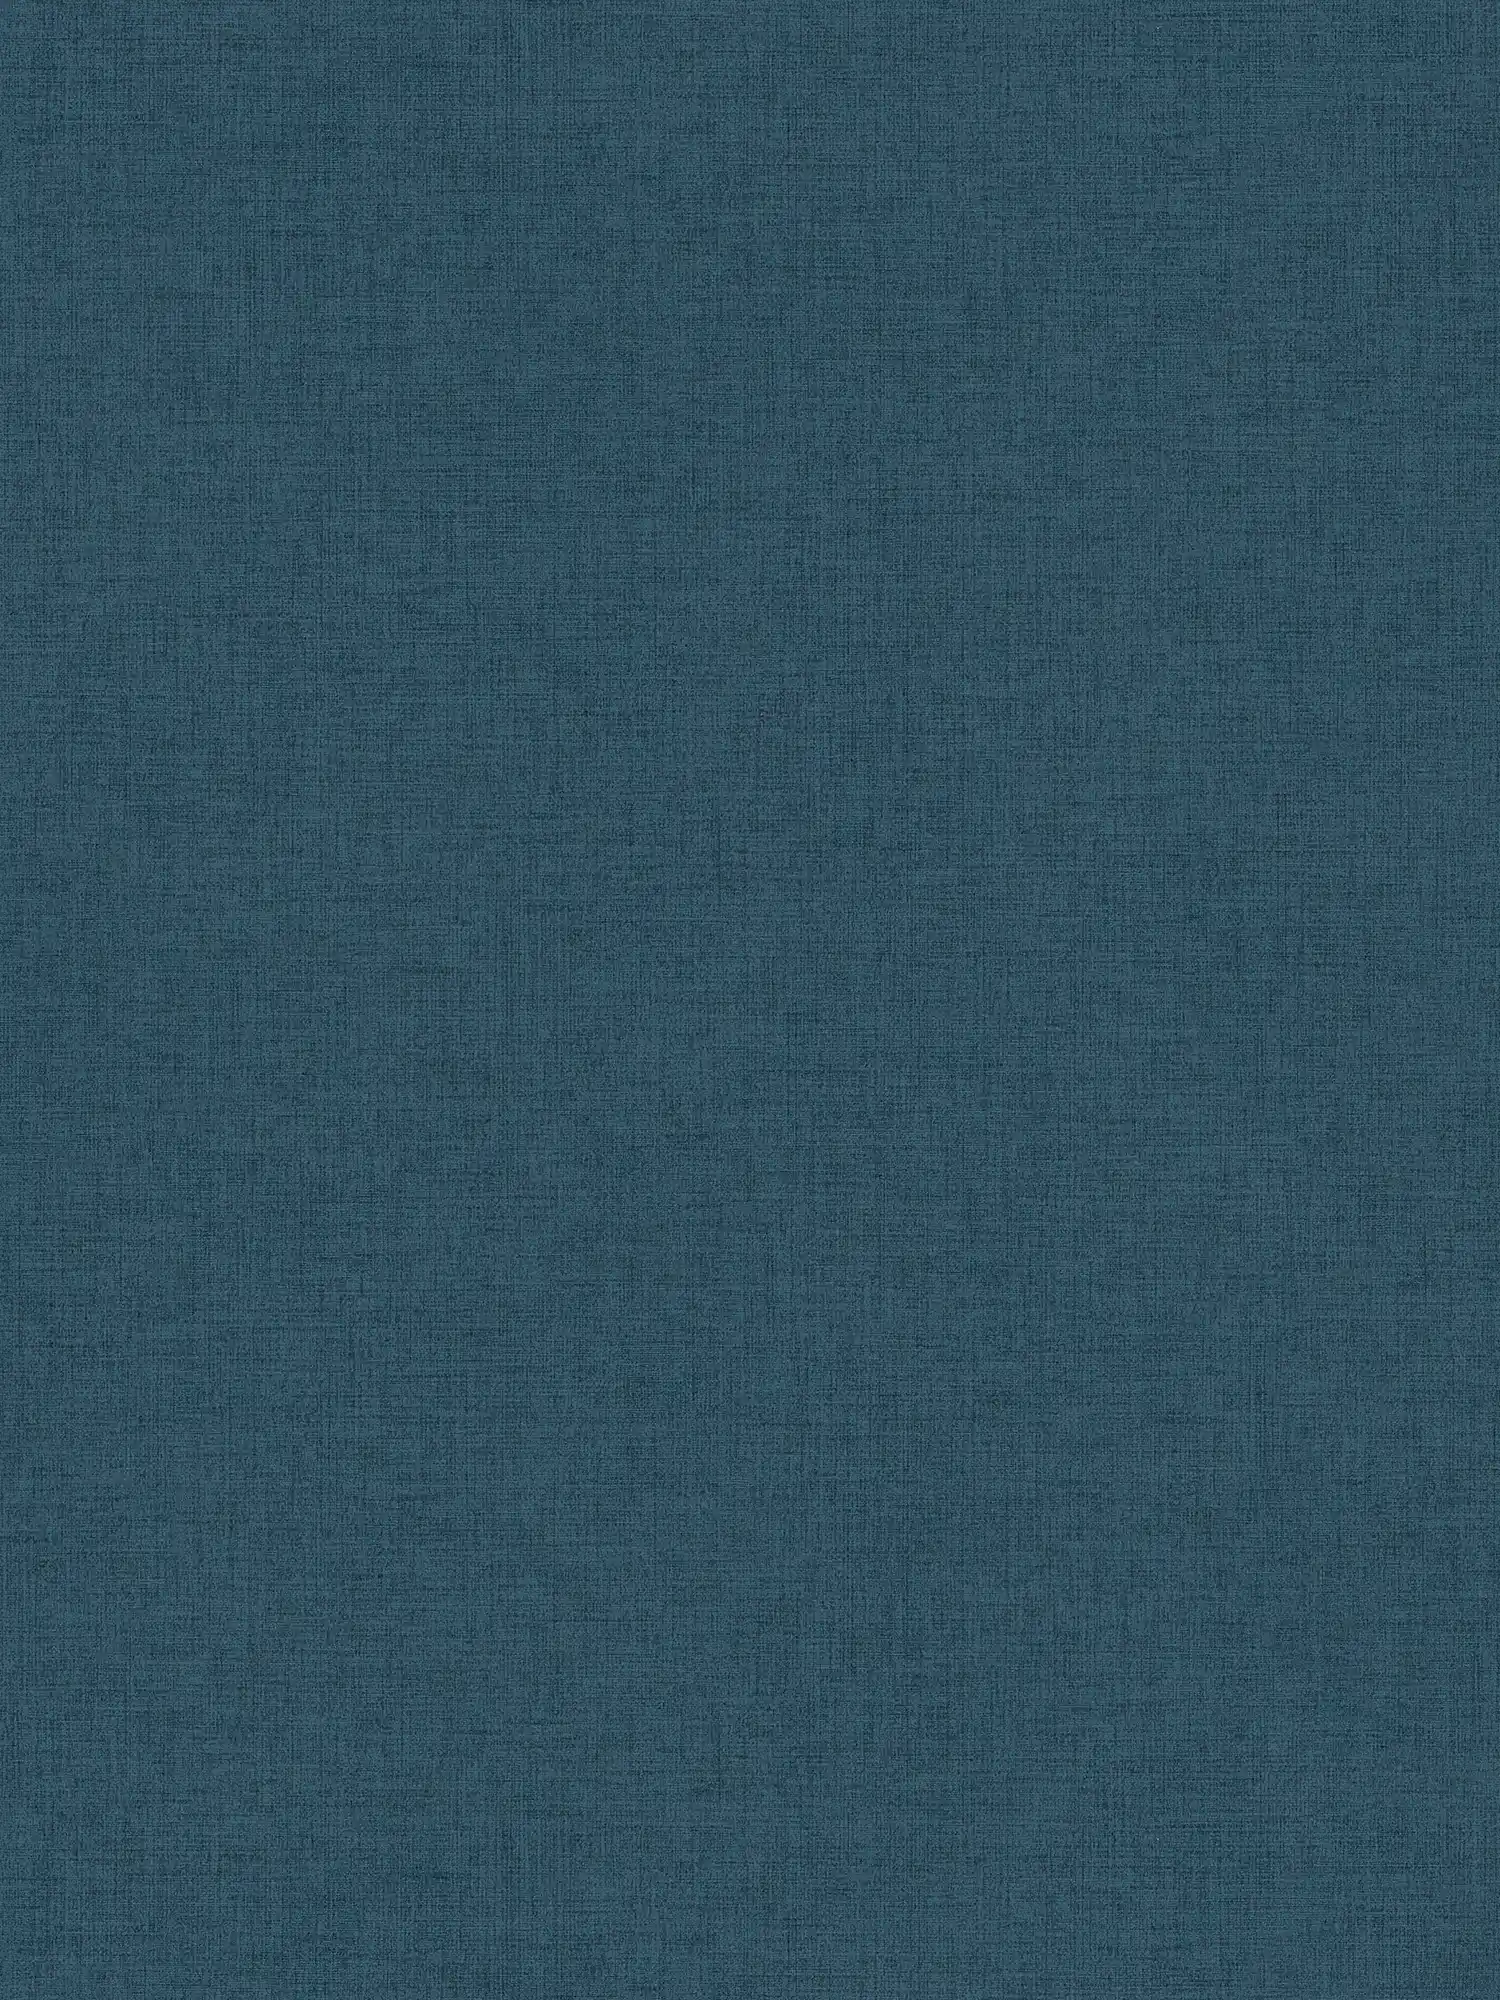 Linen look non-woven wallpaper in petrol blue
